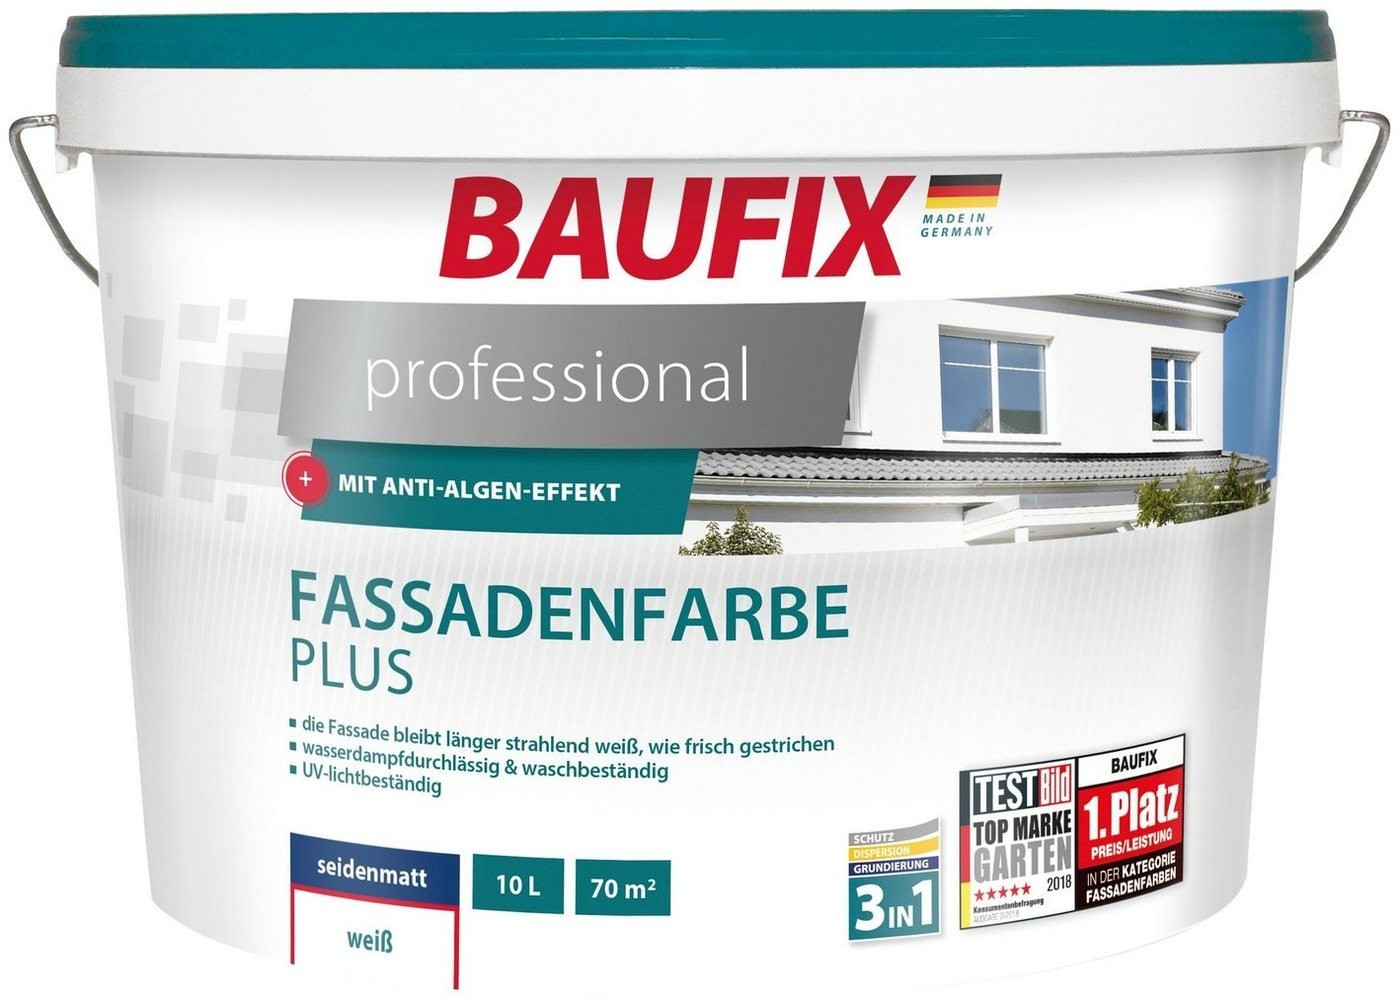 Baufix professional Fassadenfarbe Plus 10 l ab 37,99 € | Preisvergleich bei